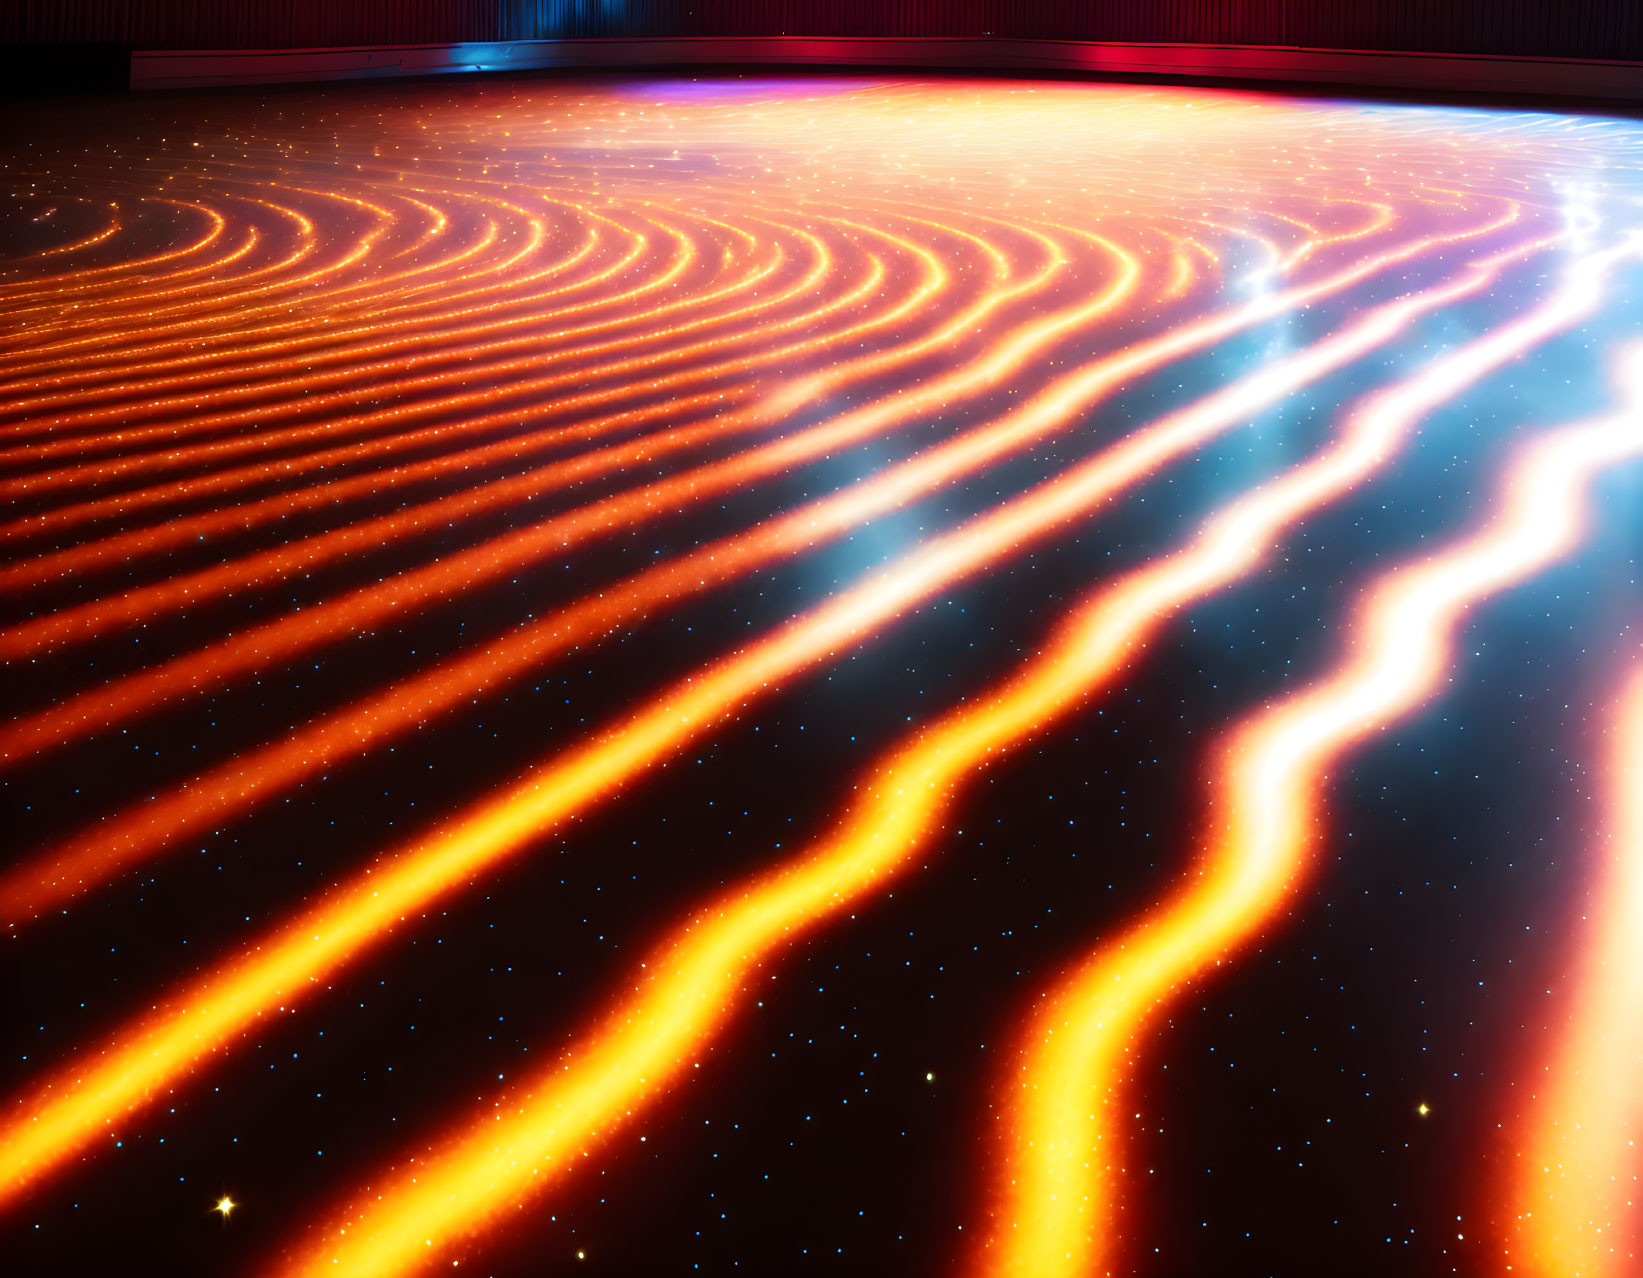 Abstract Digital Art: Orange and Yellow Light Waves